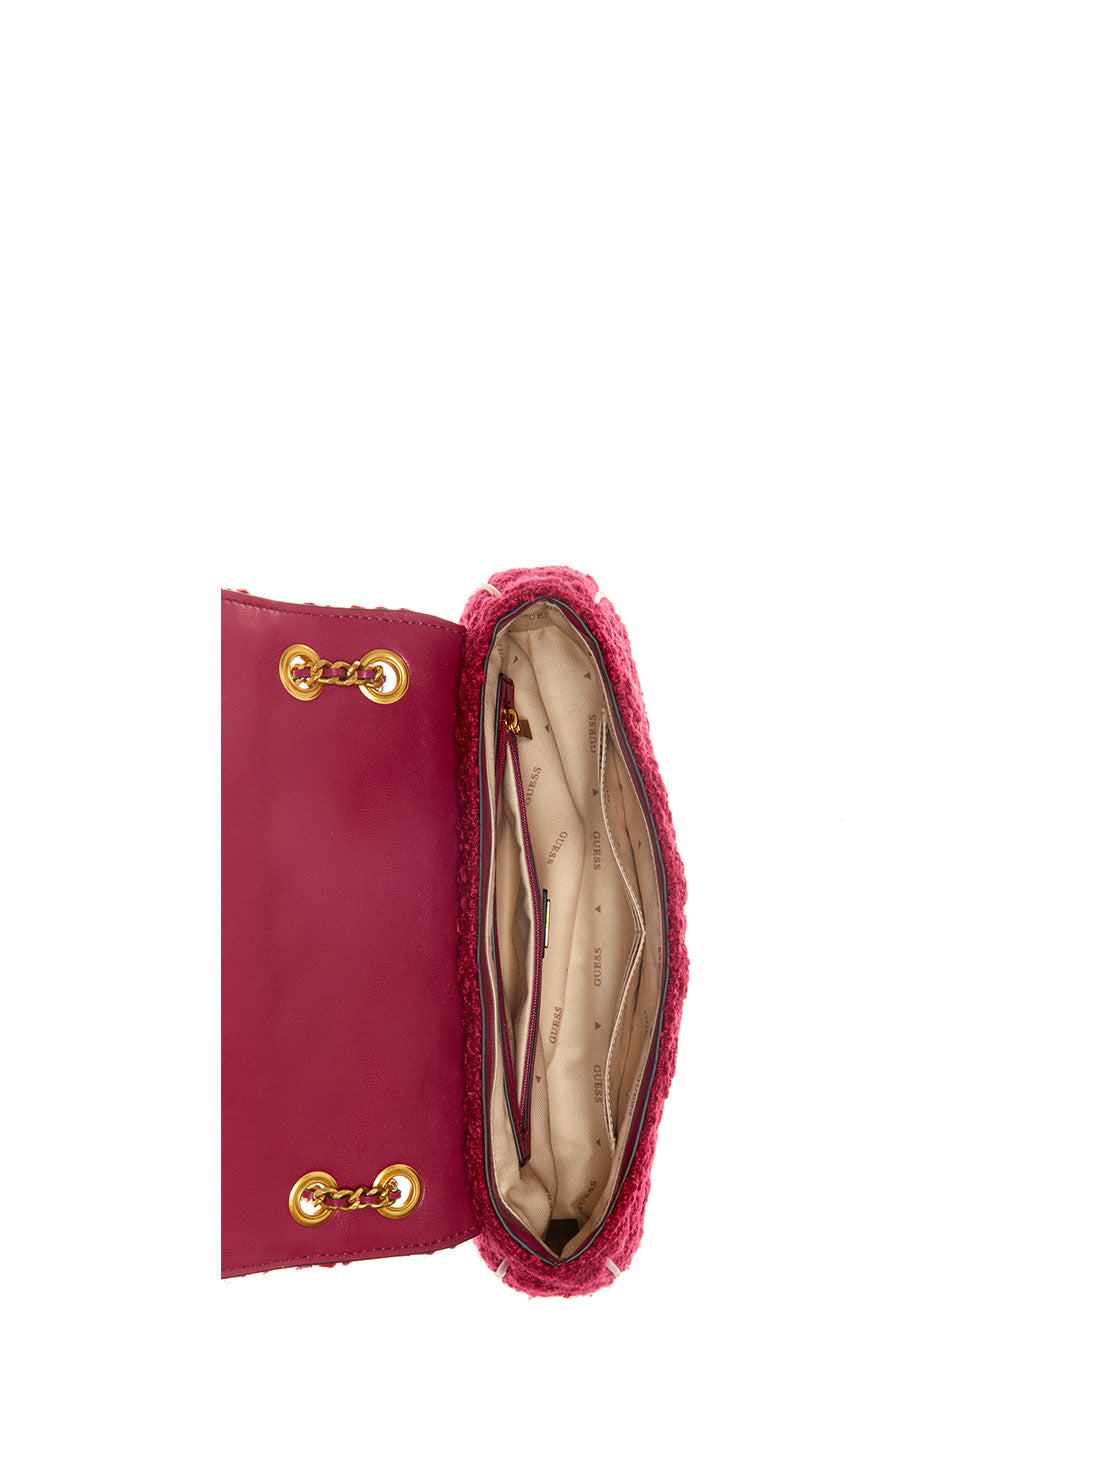 GUESS Women's Boysenberry Giully Crossbody Bag TY874821 Inside View